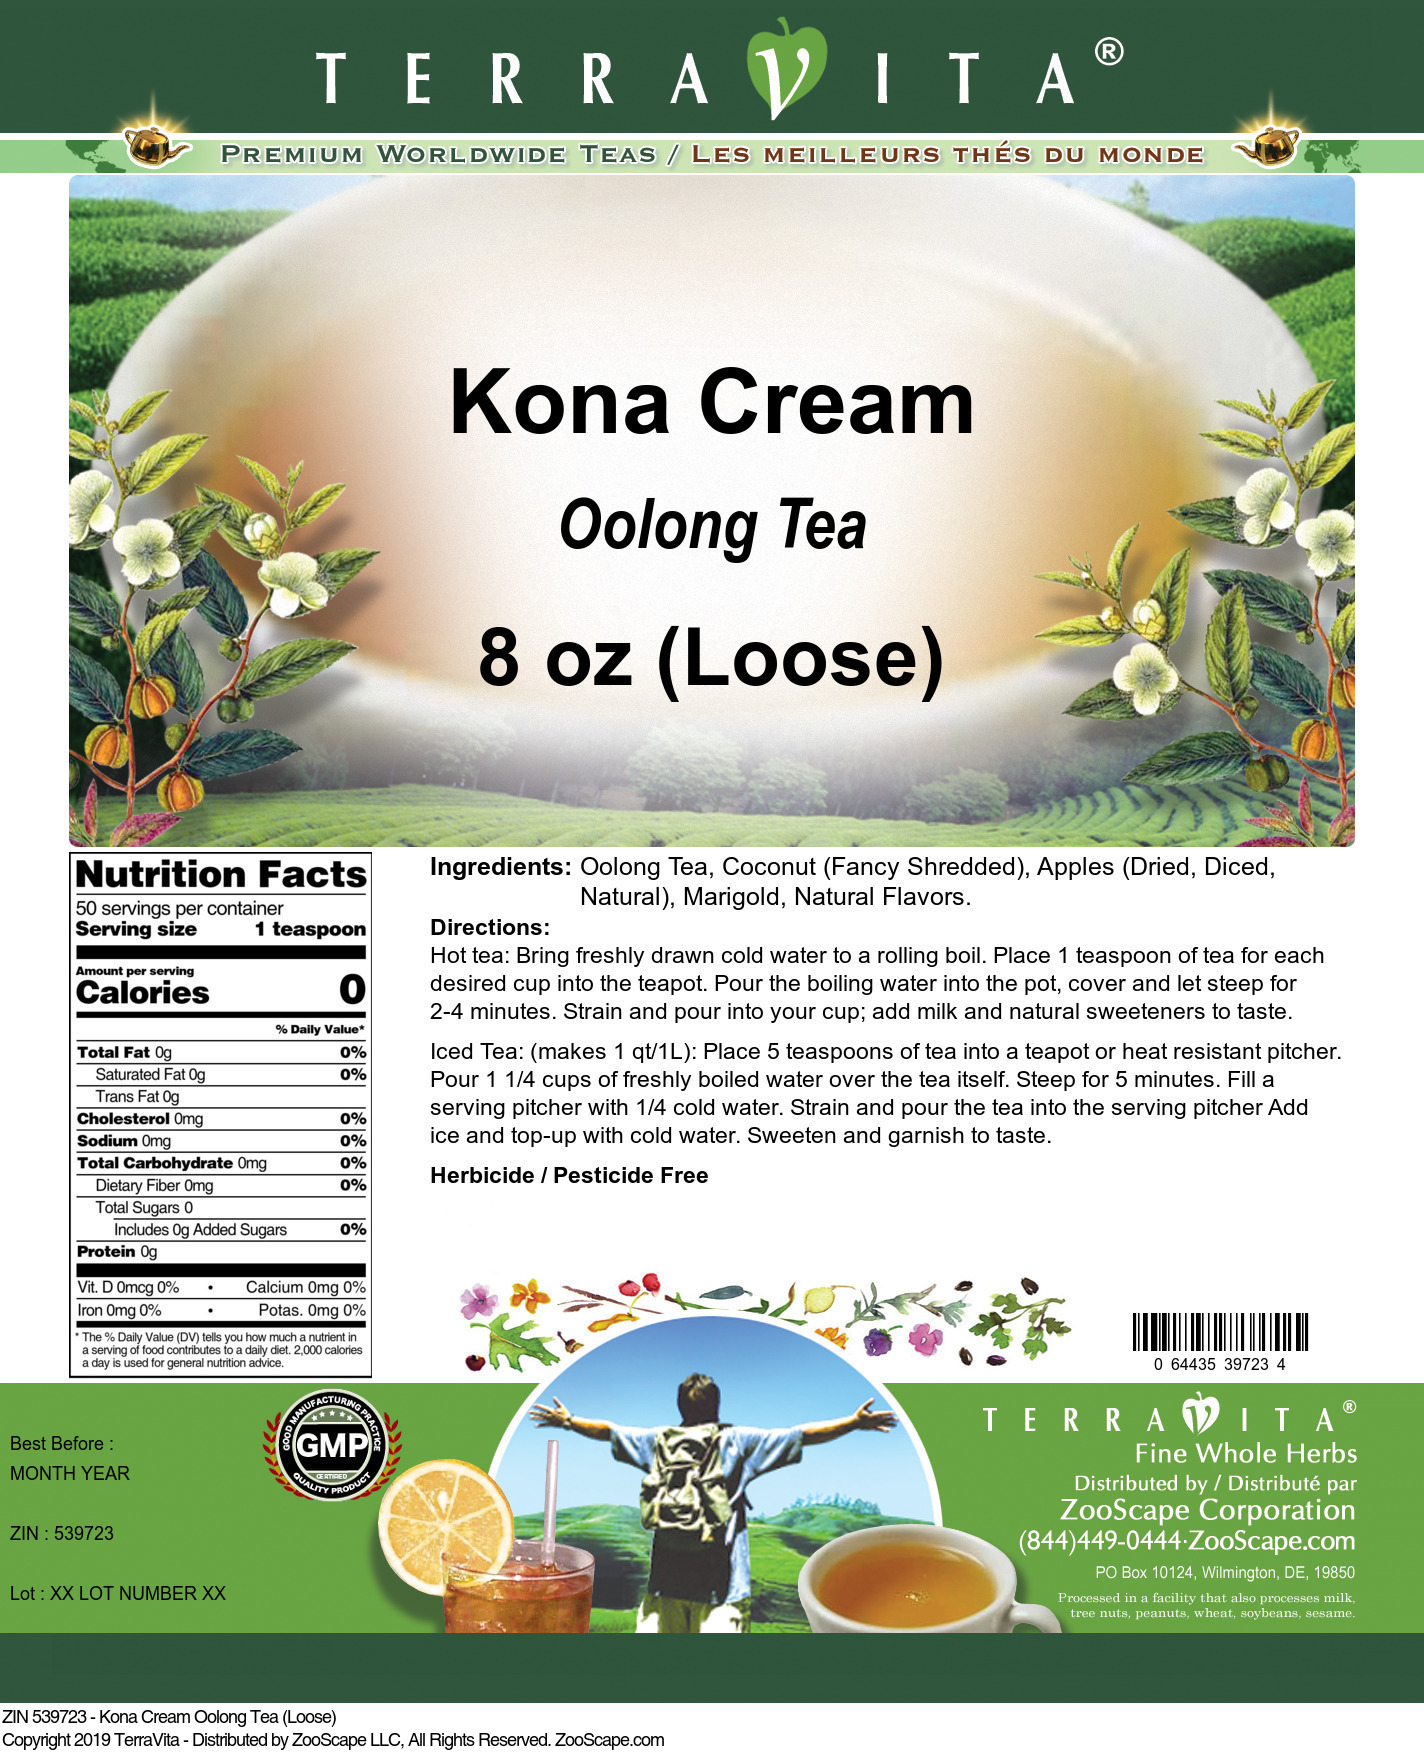 Kona Cream Oolong Tea (Loose) - Label